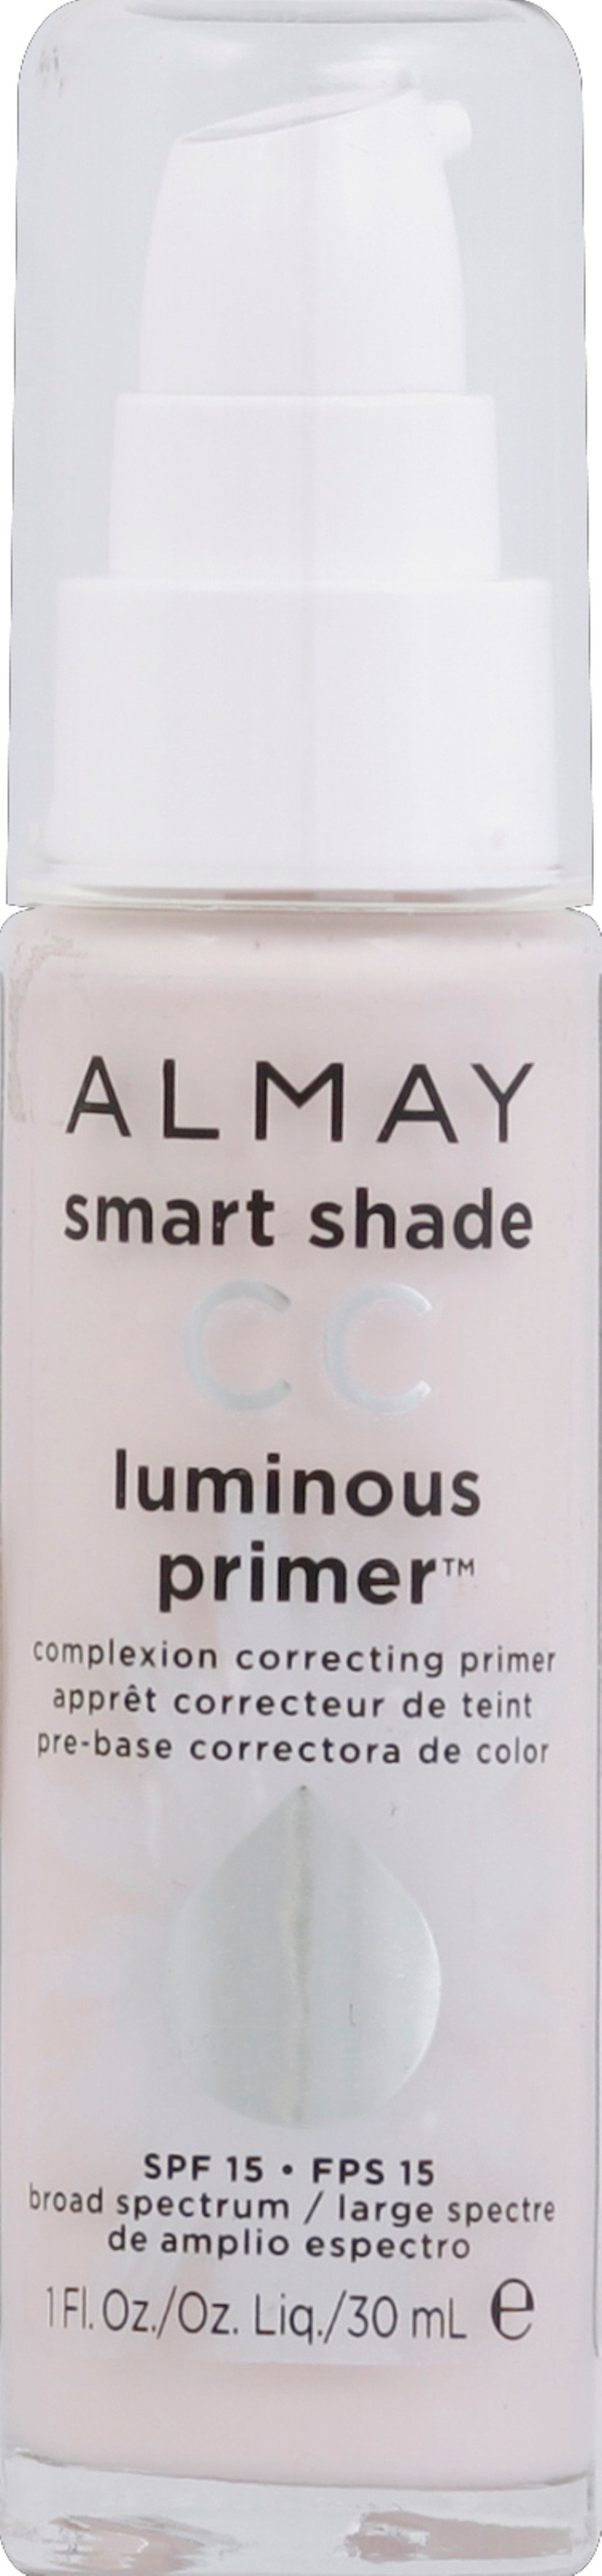 Almay Luminous Primer  SPF 15  Broad Spectrum  1 fl oz (30 ml)